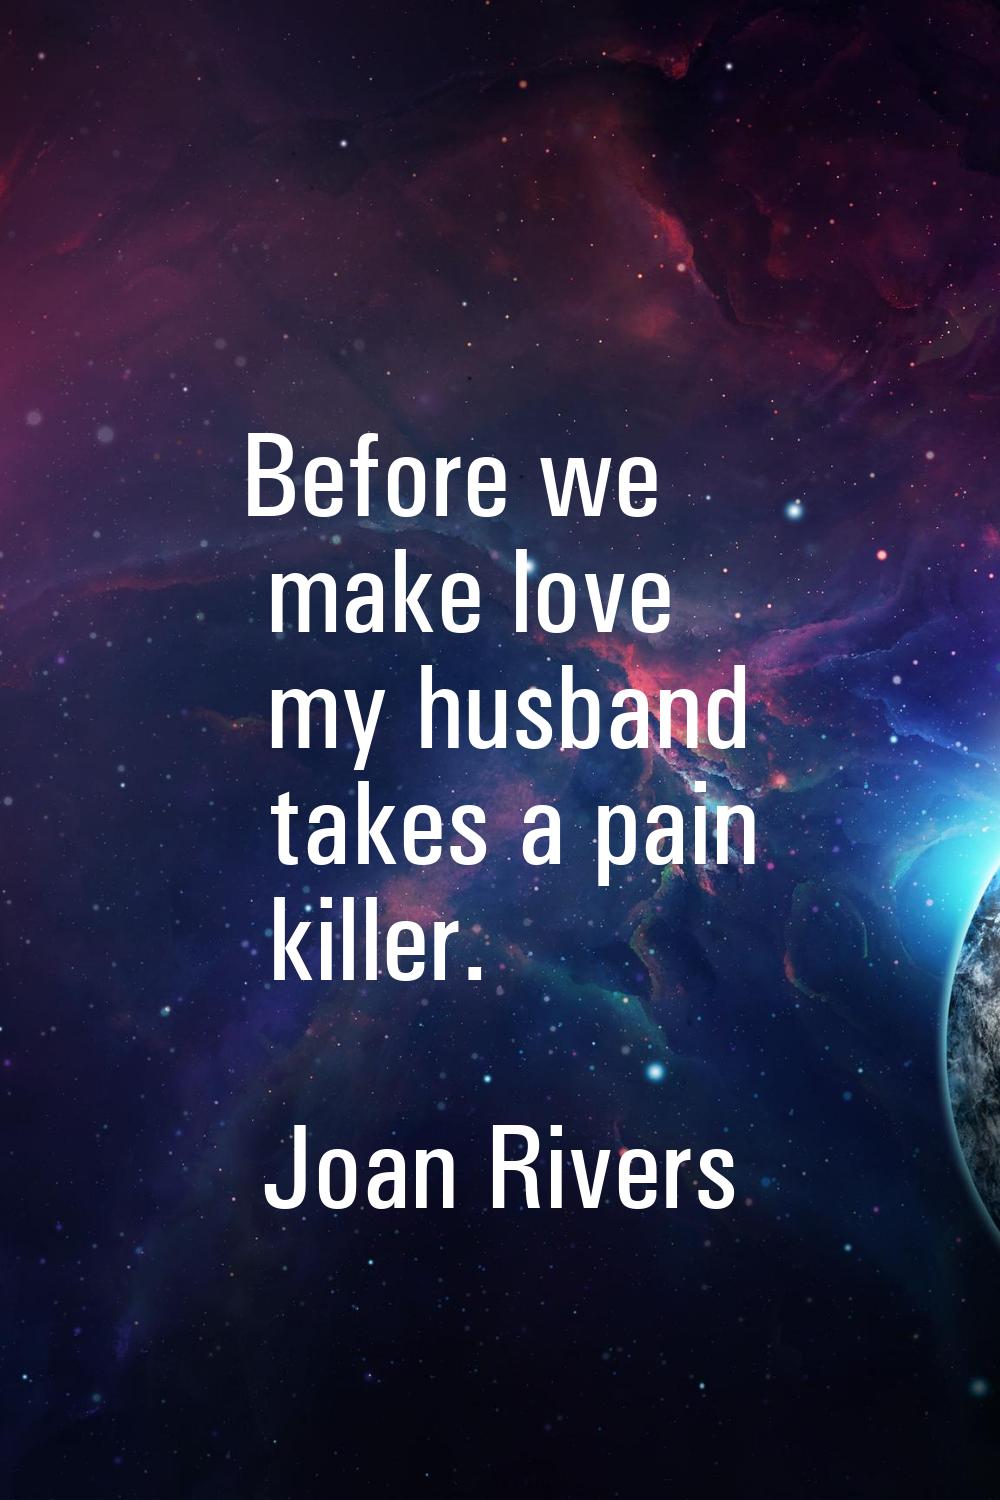 Before we make love my husband takes a pain killer.